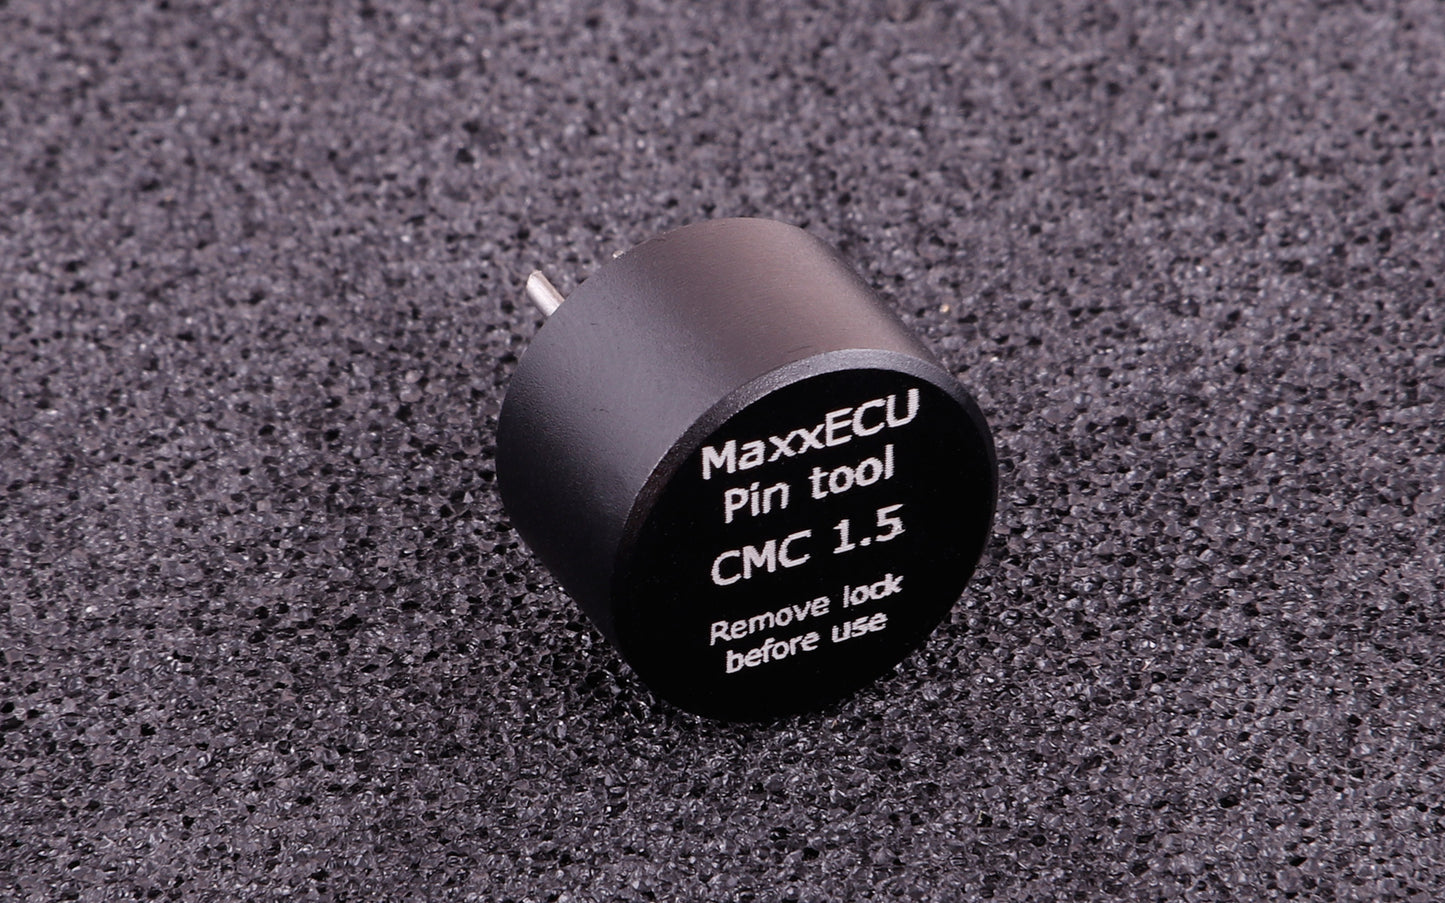 Maxxecu CMC Connector De-pinning tools